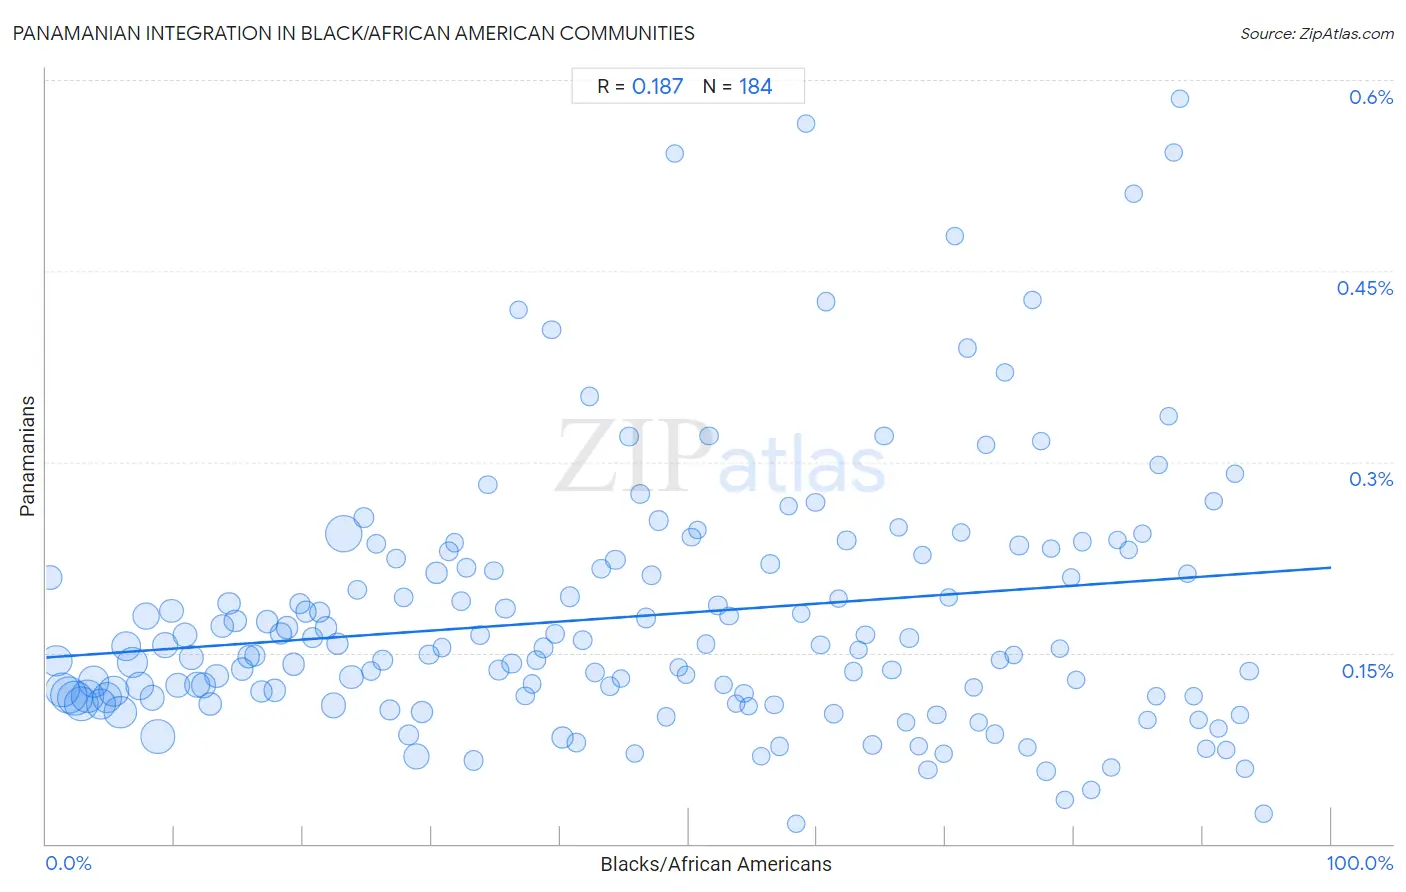 Black/African American Integration in Panamanian Communities